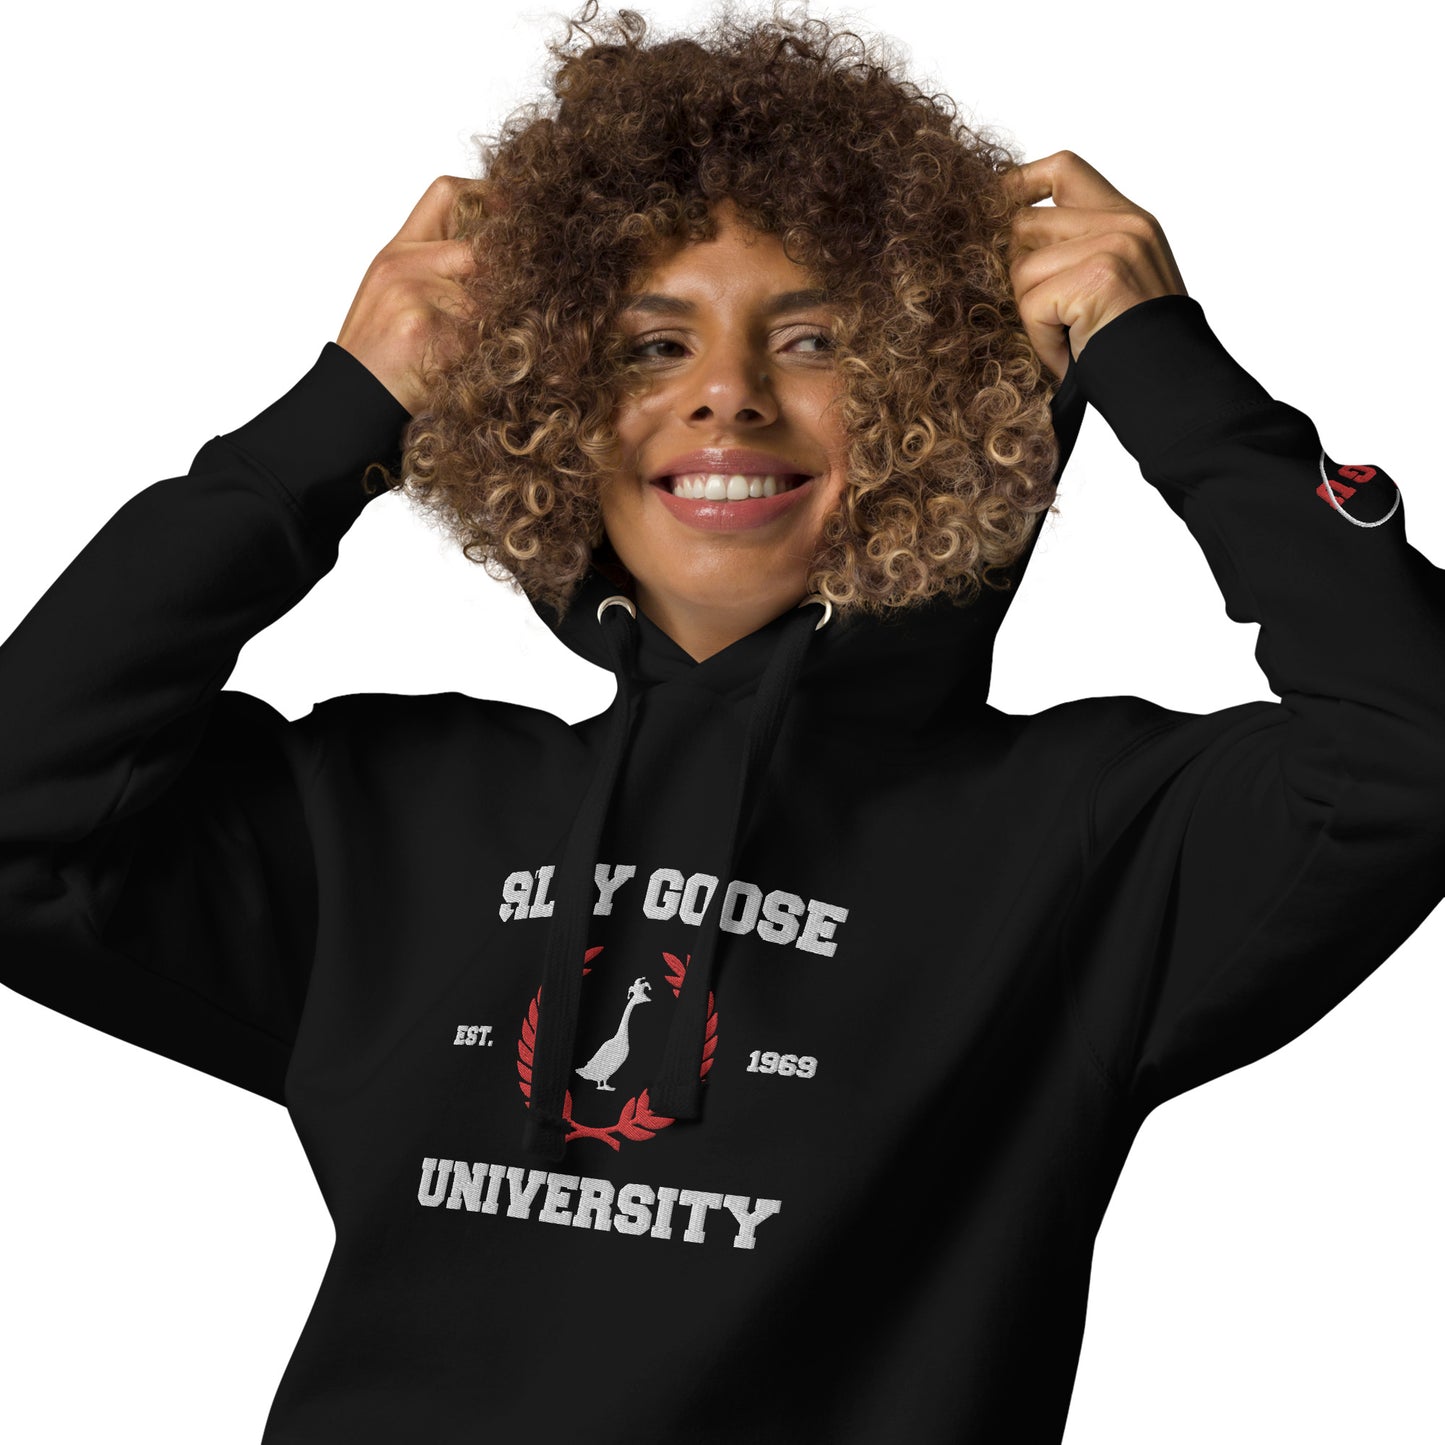 SGU Collegiate Seal Valentine's Edition | Premium Unisex Hoodie - Red/White/Black - Embroidered